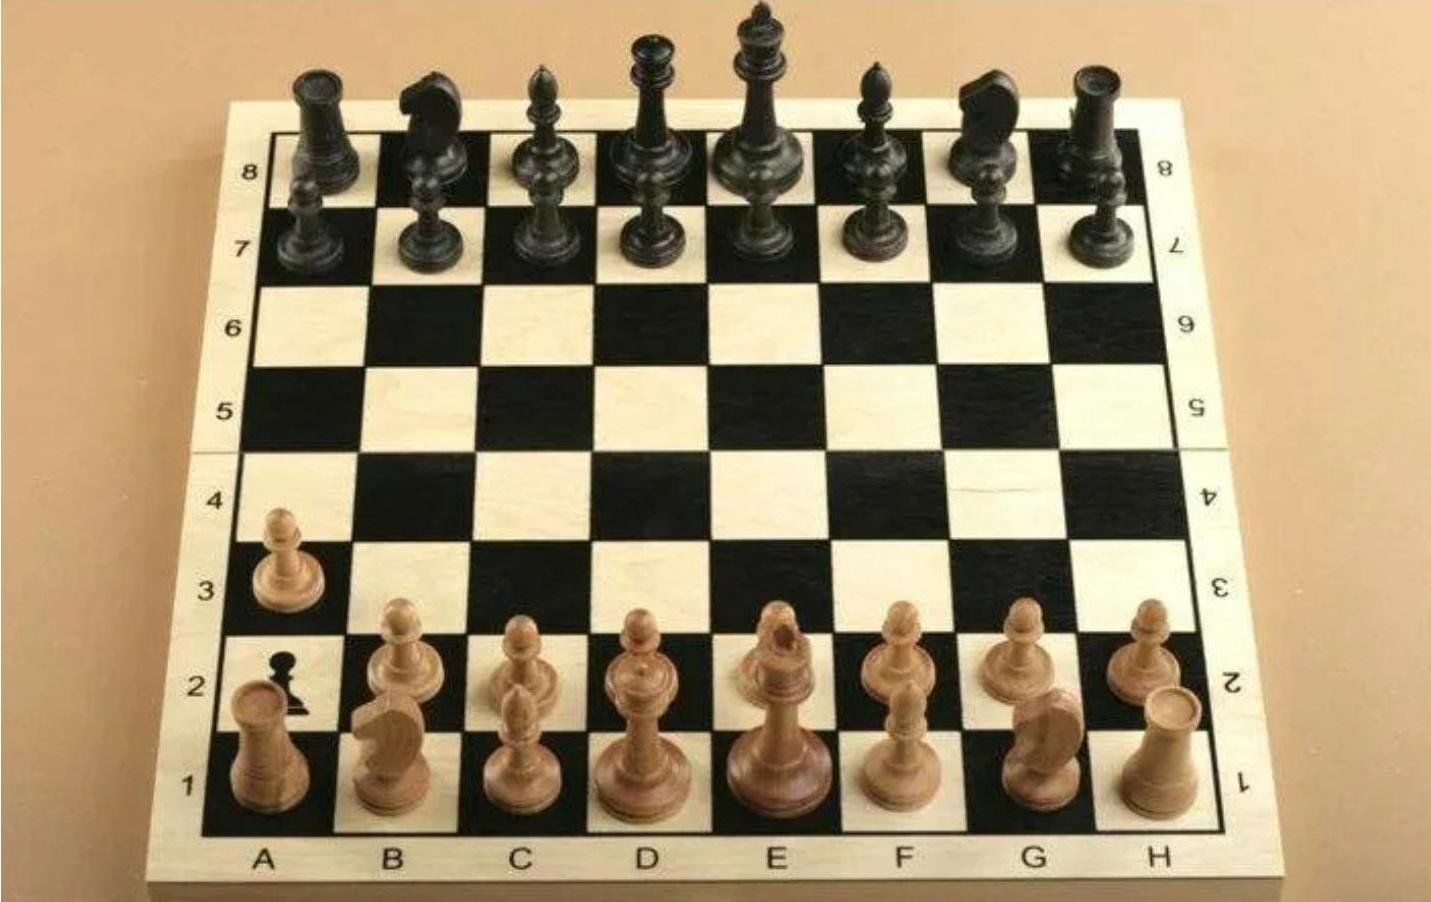 Как расставлять шахматы на шахматной доске. Шахматы расстановка фигур. Расстановка шахмат на доске Король и ферзь. Расстановка фигур в шахматах Король и ферзь. Расставление фигур в шахматах.